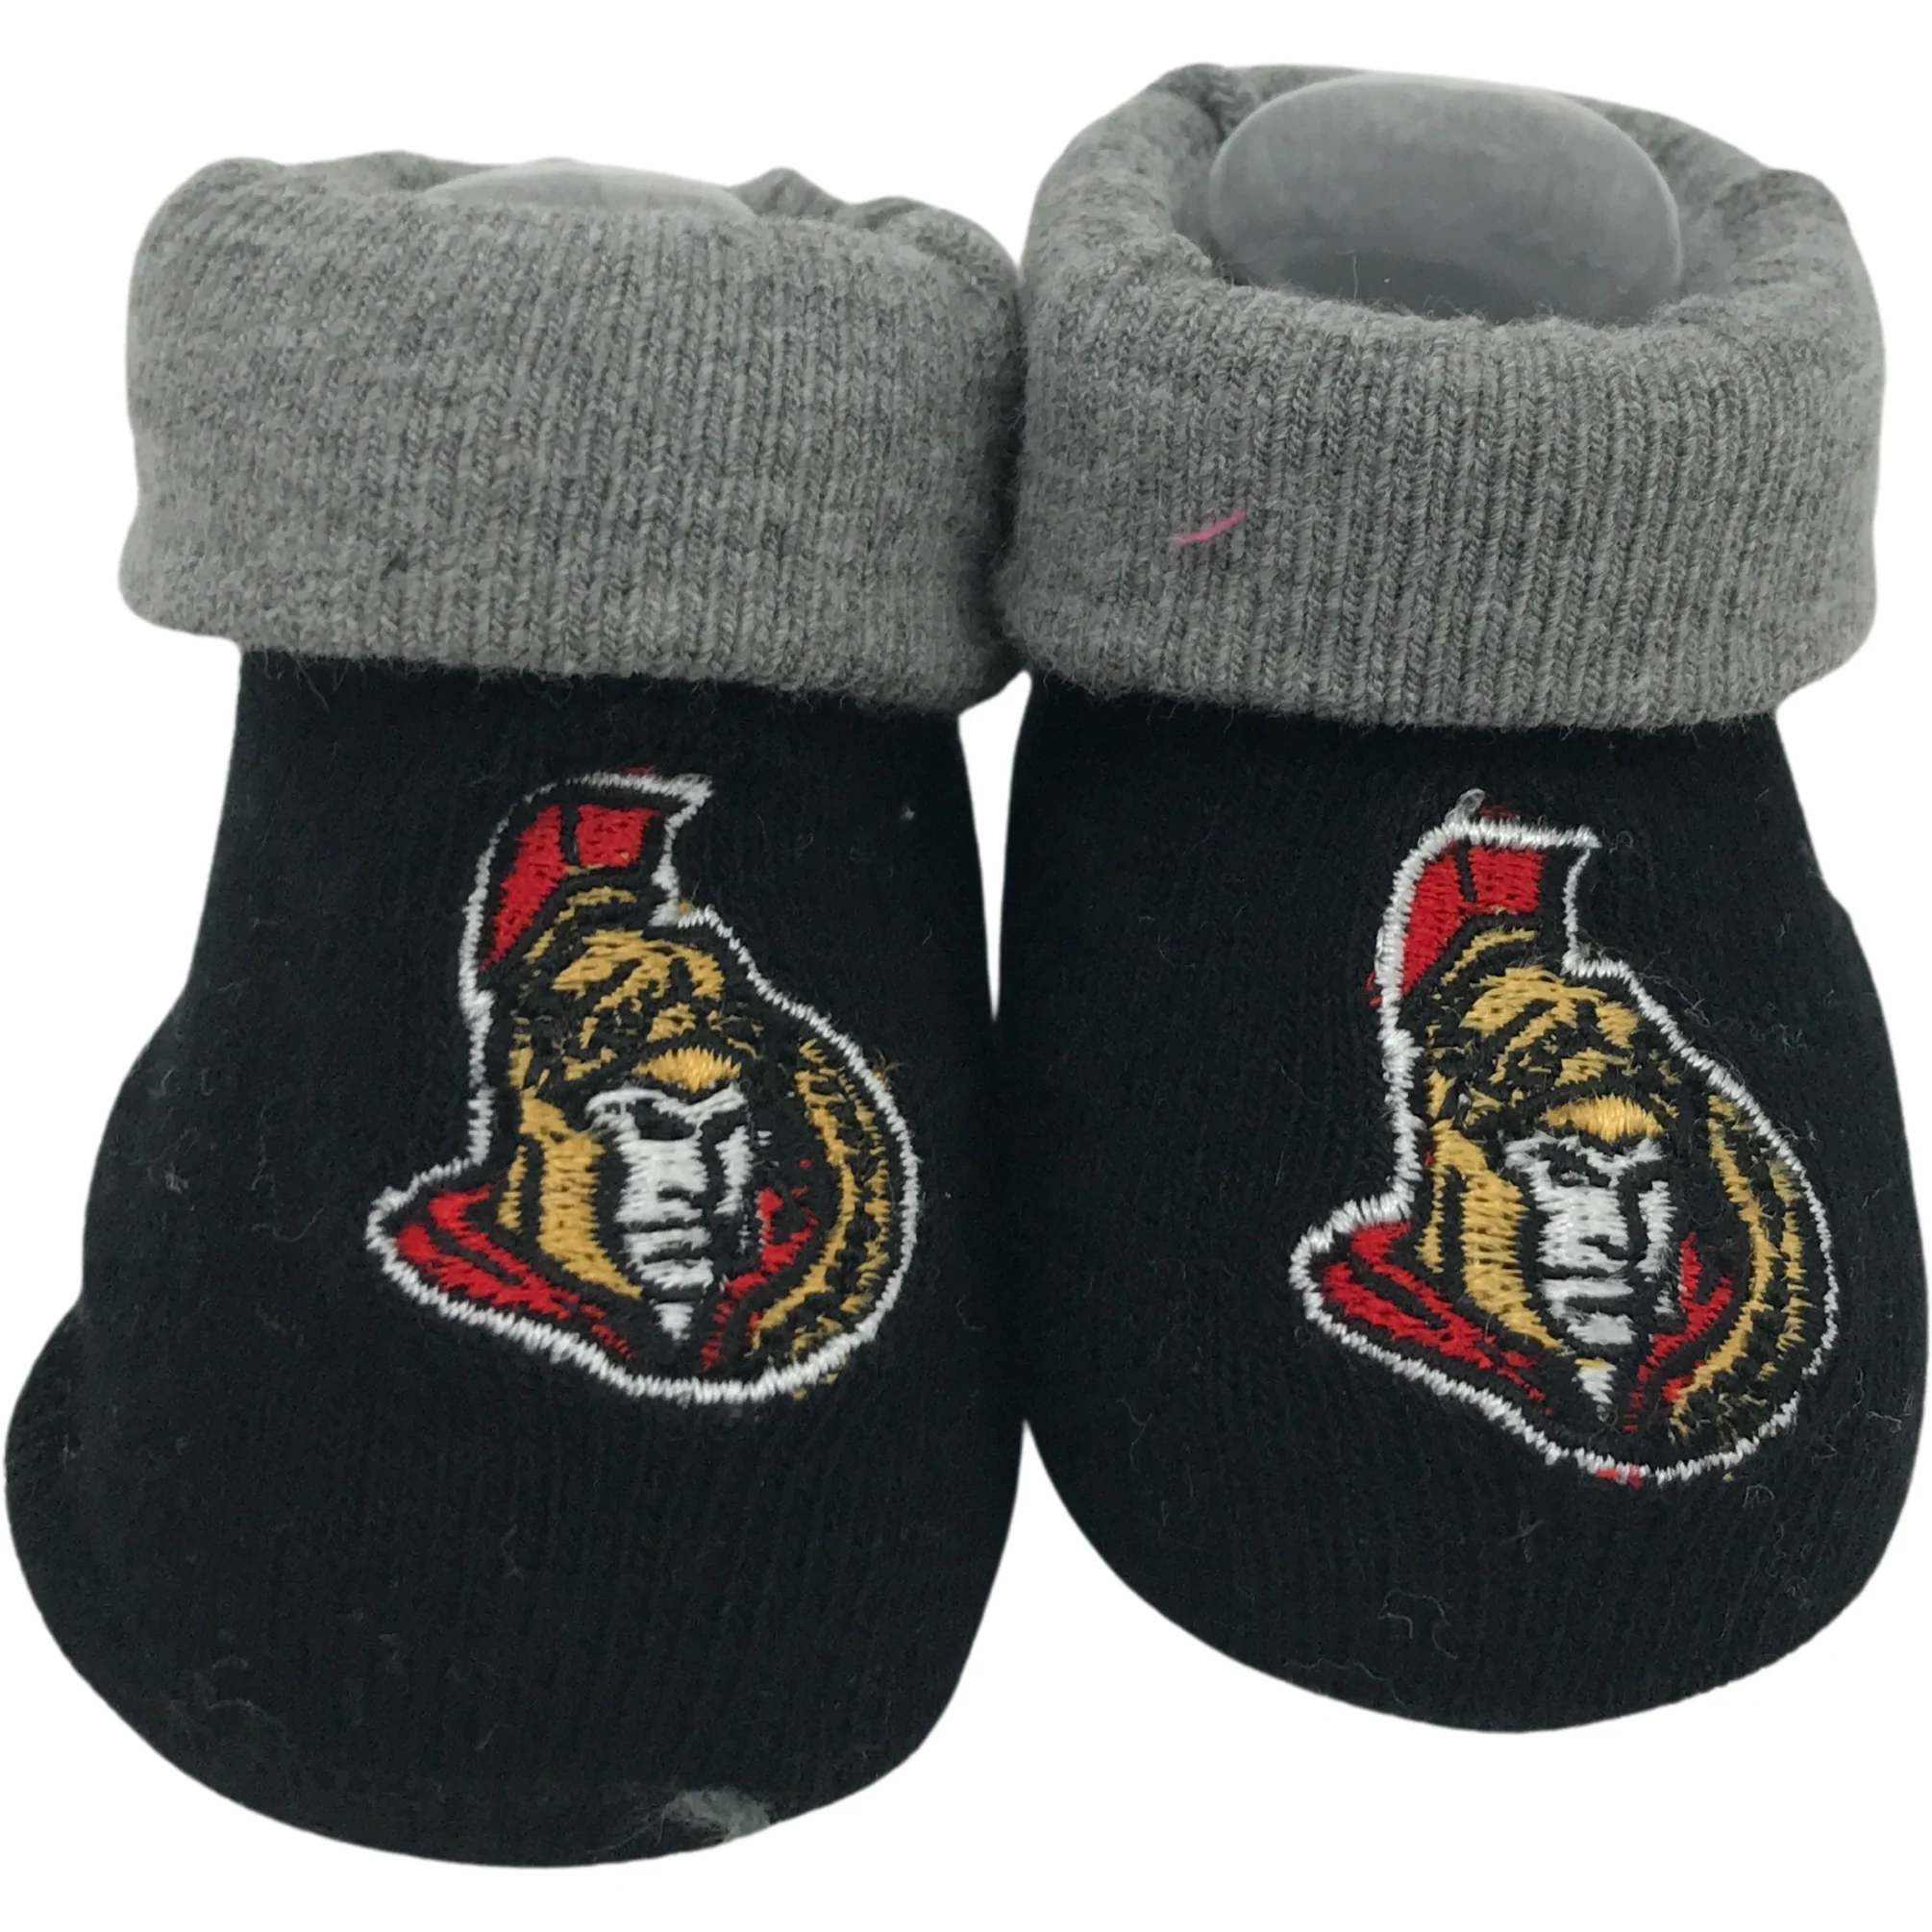 Ottawa Senators Infant Socks / 2 Pack / 0-12 Months / NHL Infant Gear